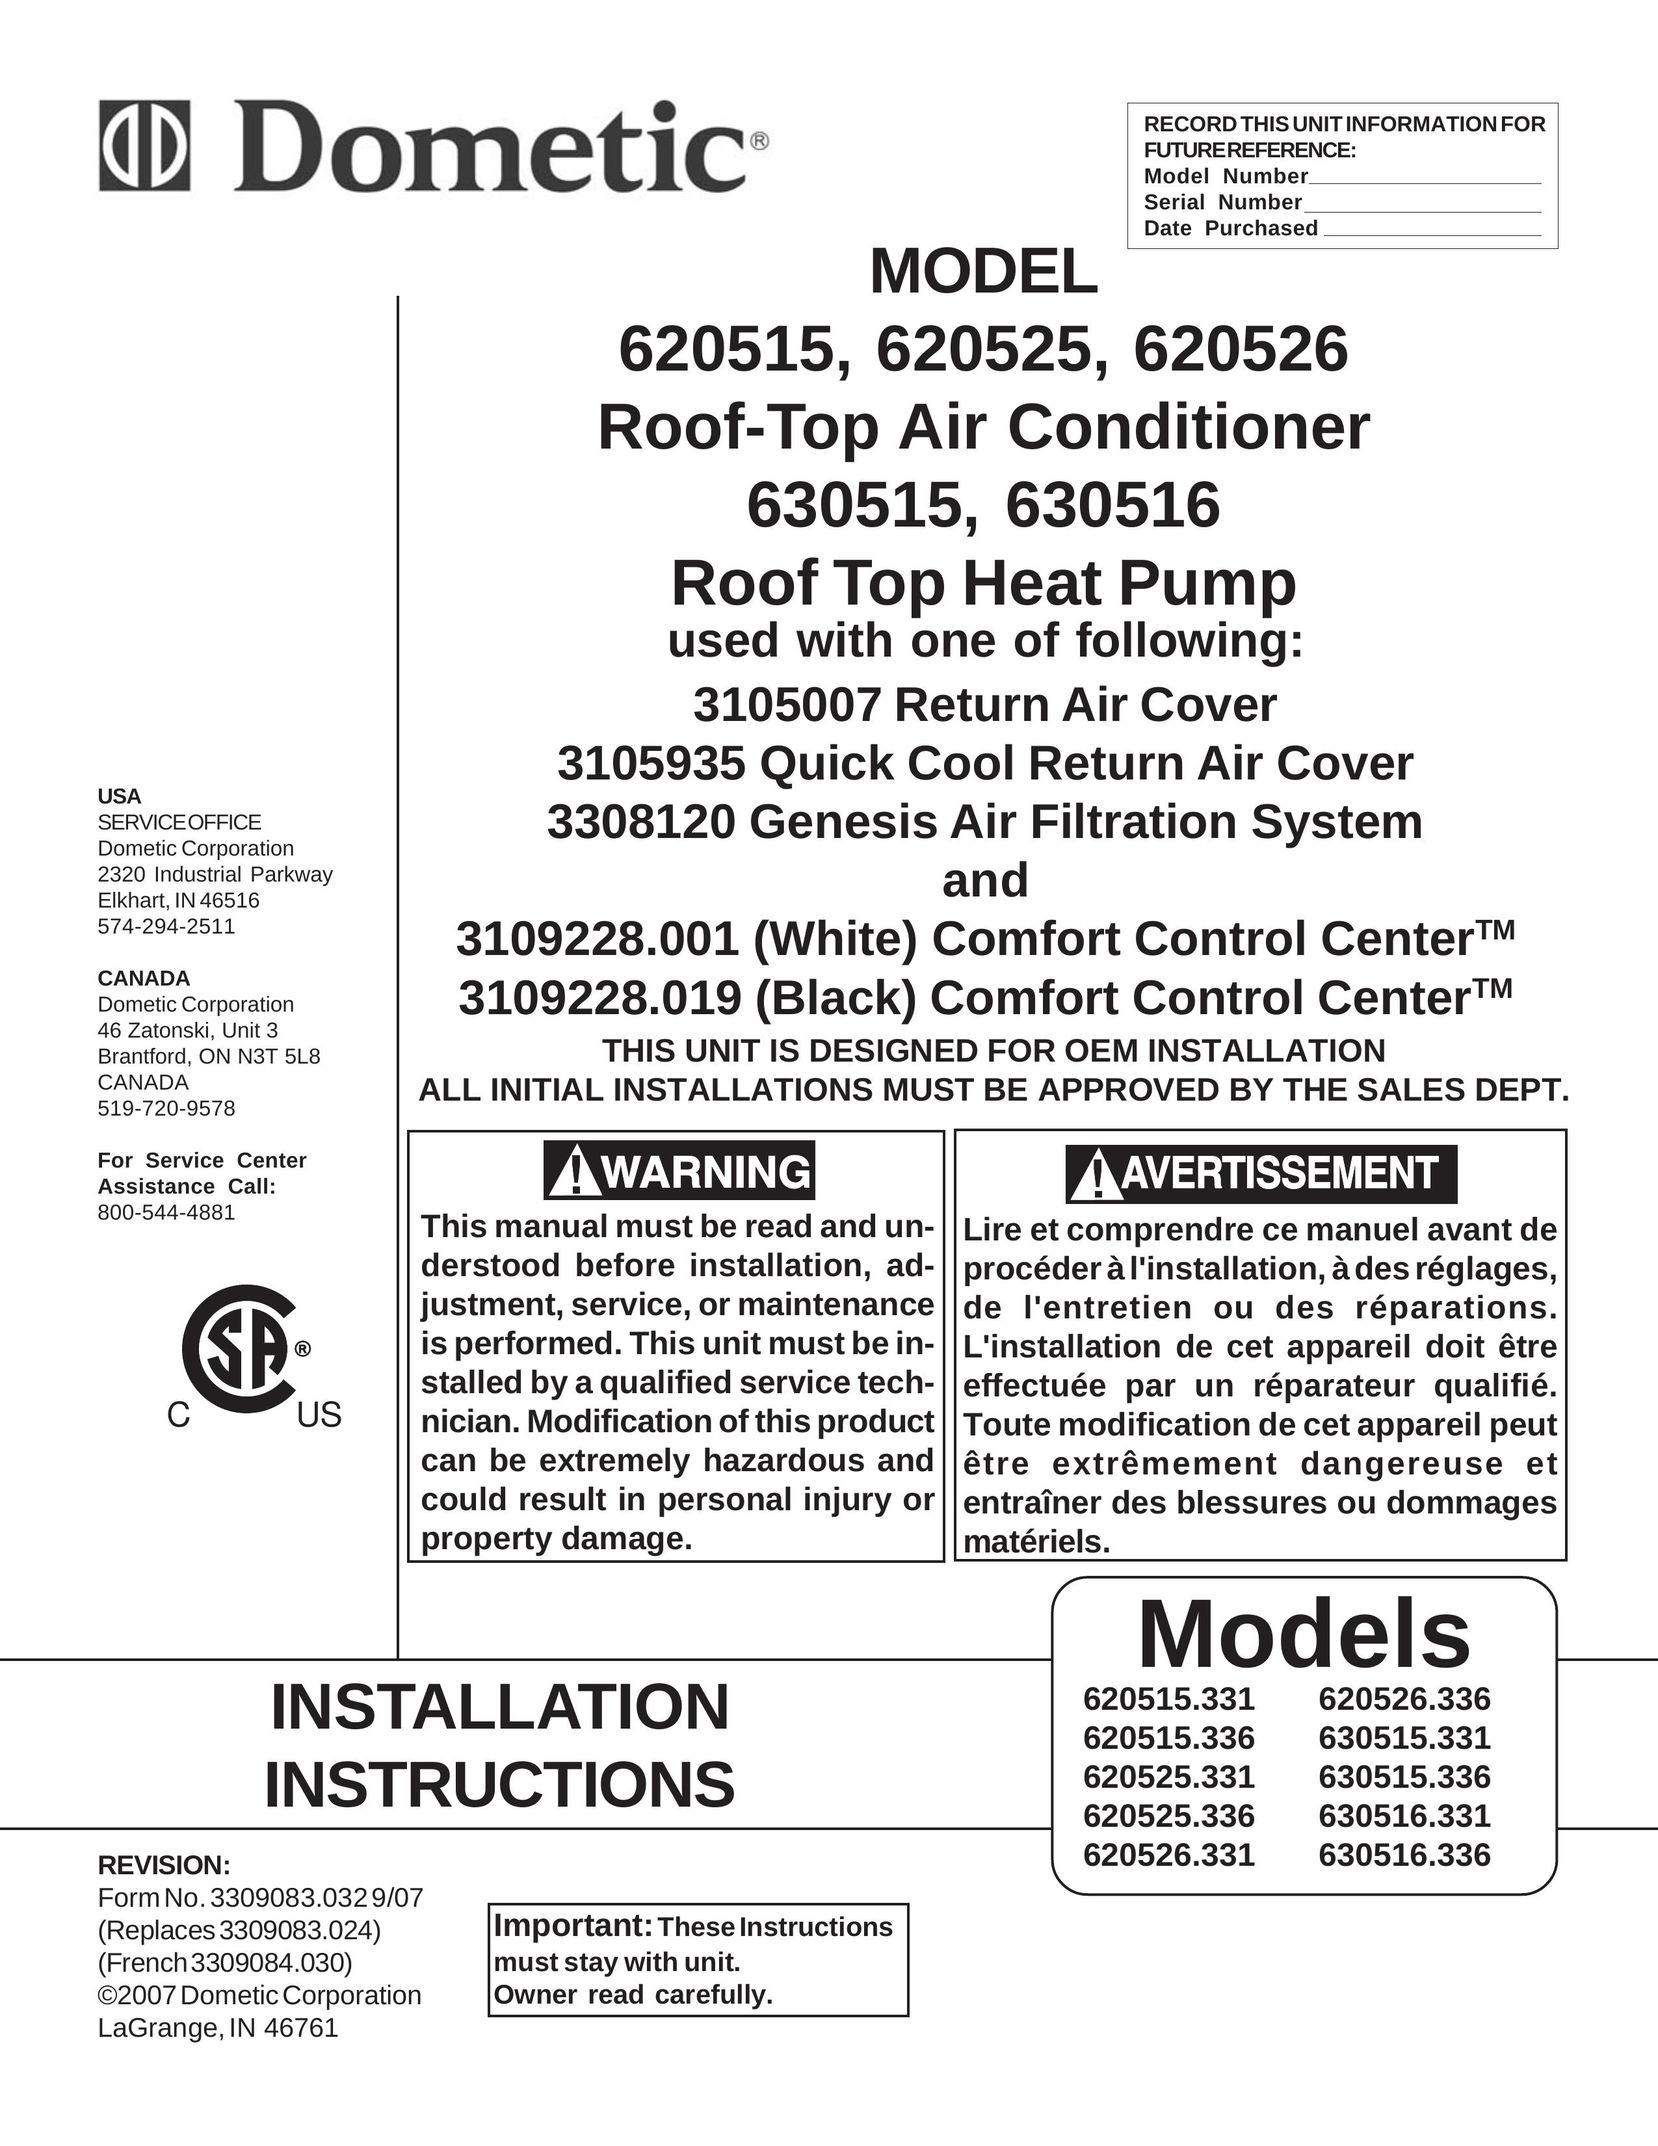 Dometic 620515.336 Air Conditioner User Manual